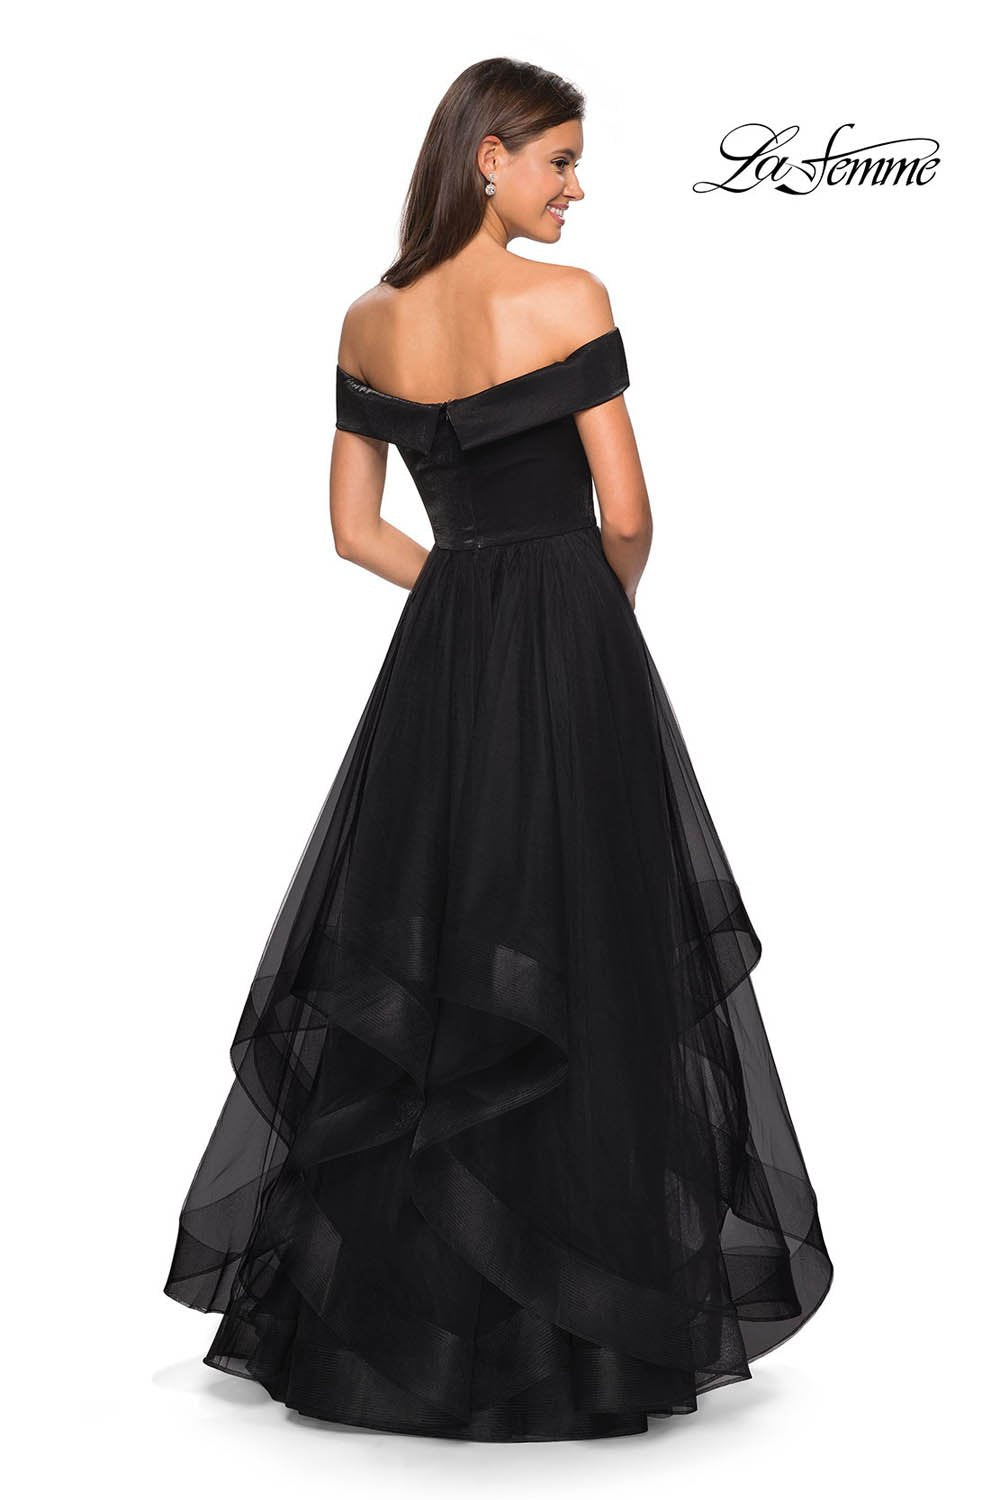 La Femme 27224 dress images in these colors: Black, Blush, White.